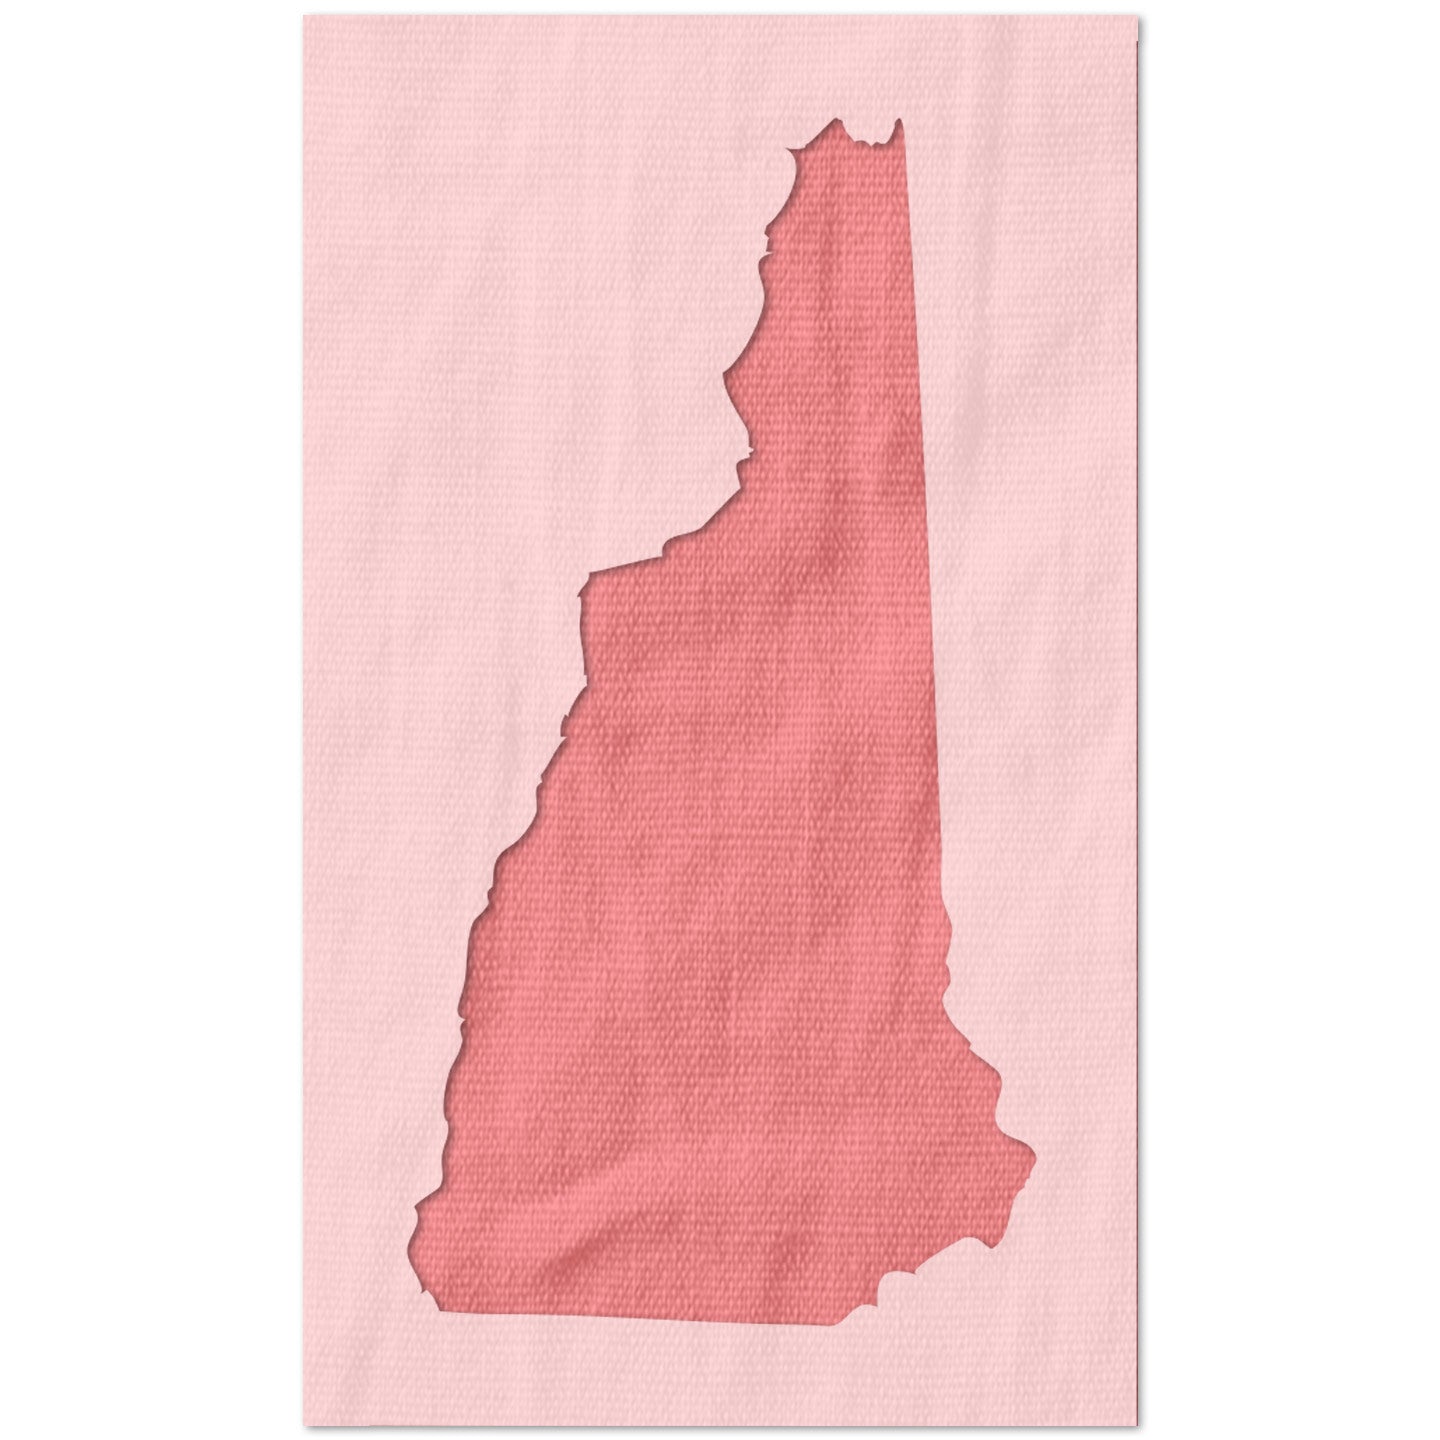 New Hampshire State Outline Stencil